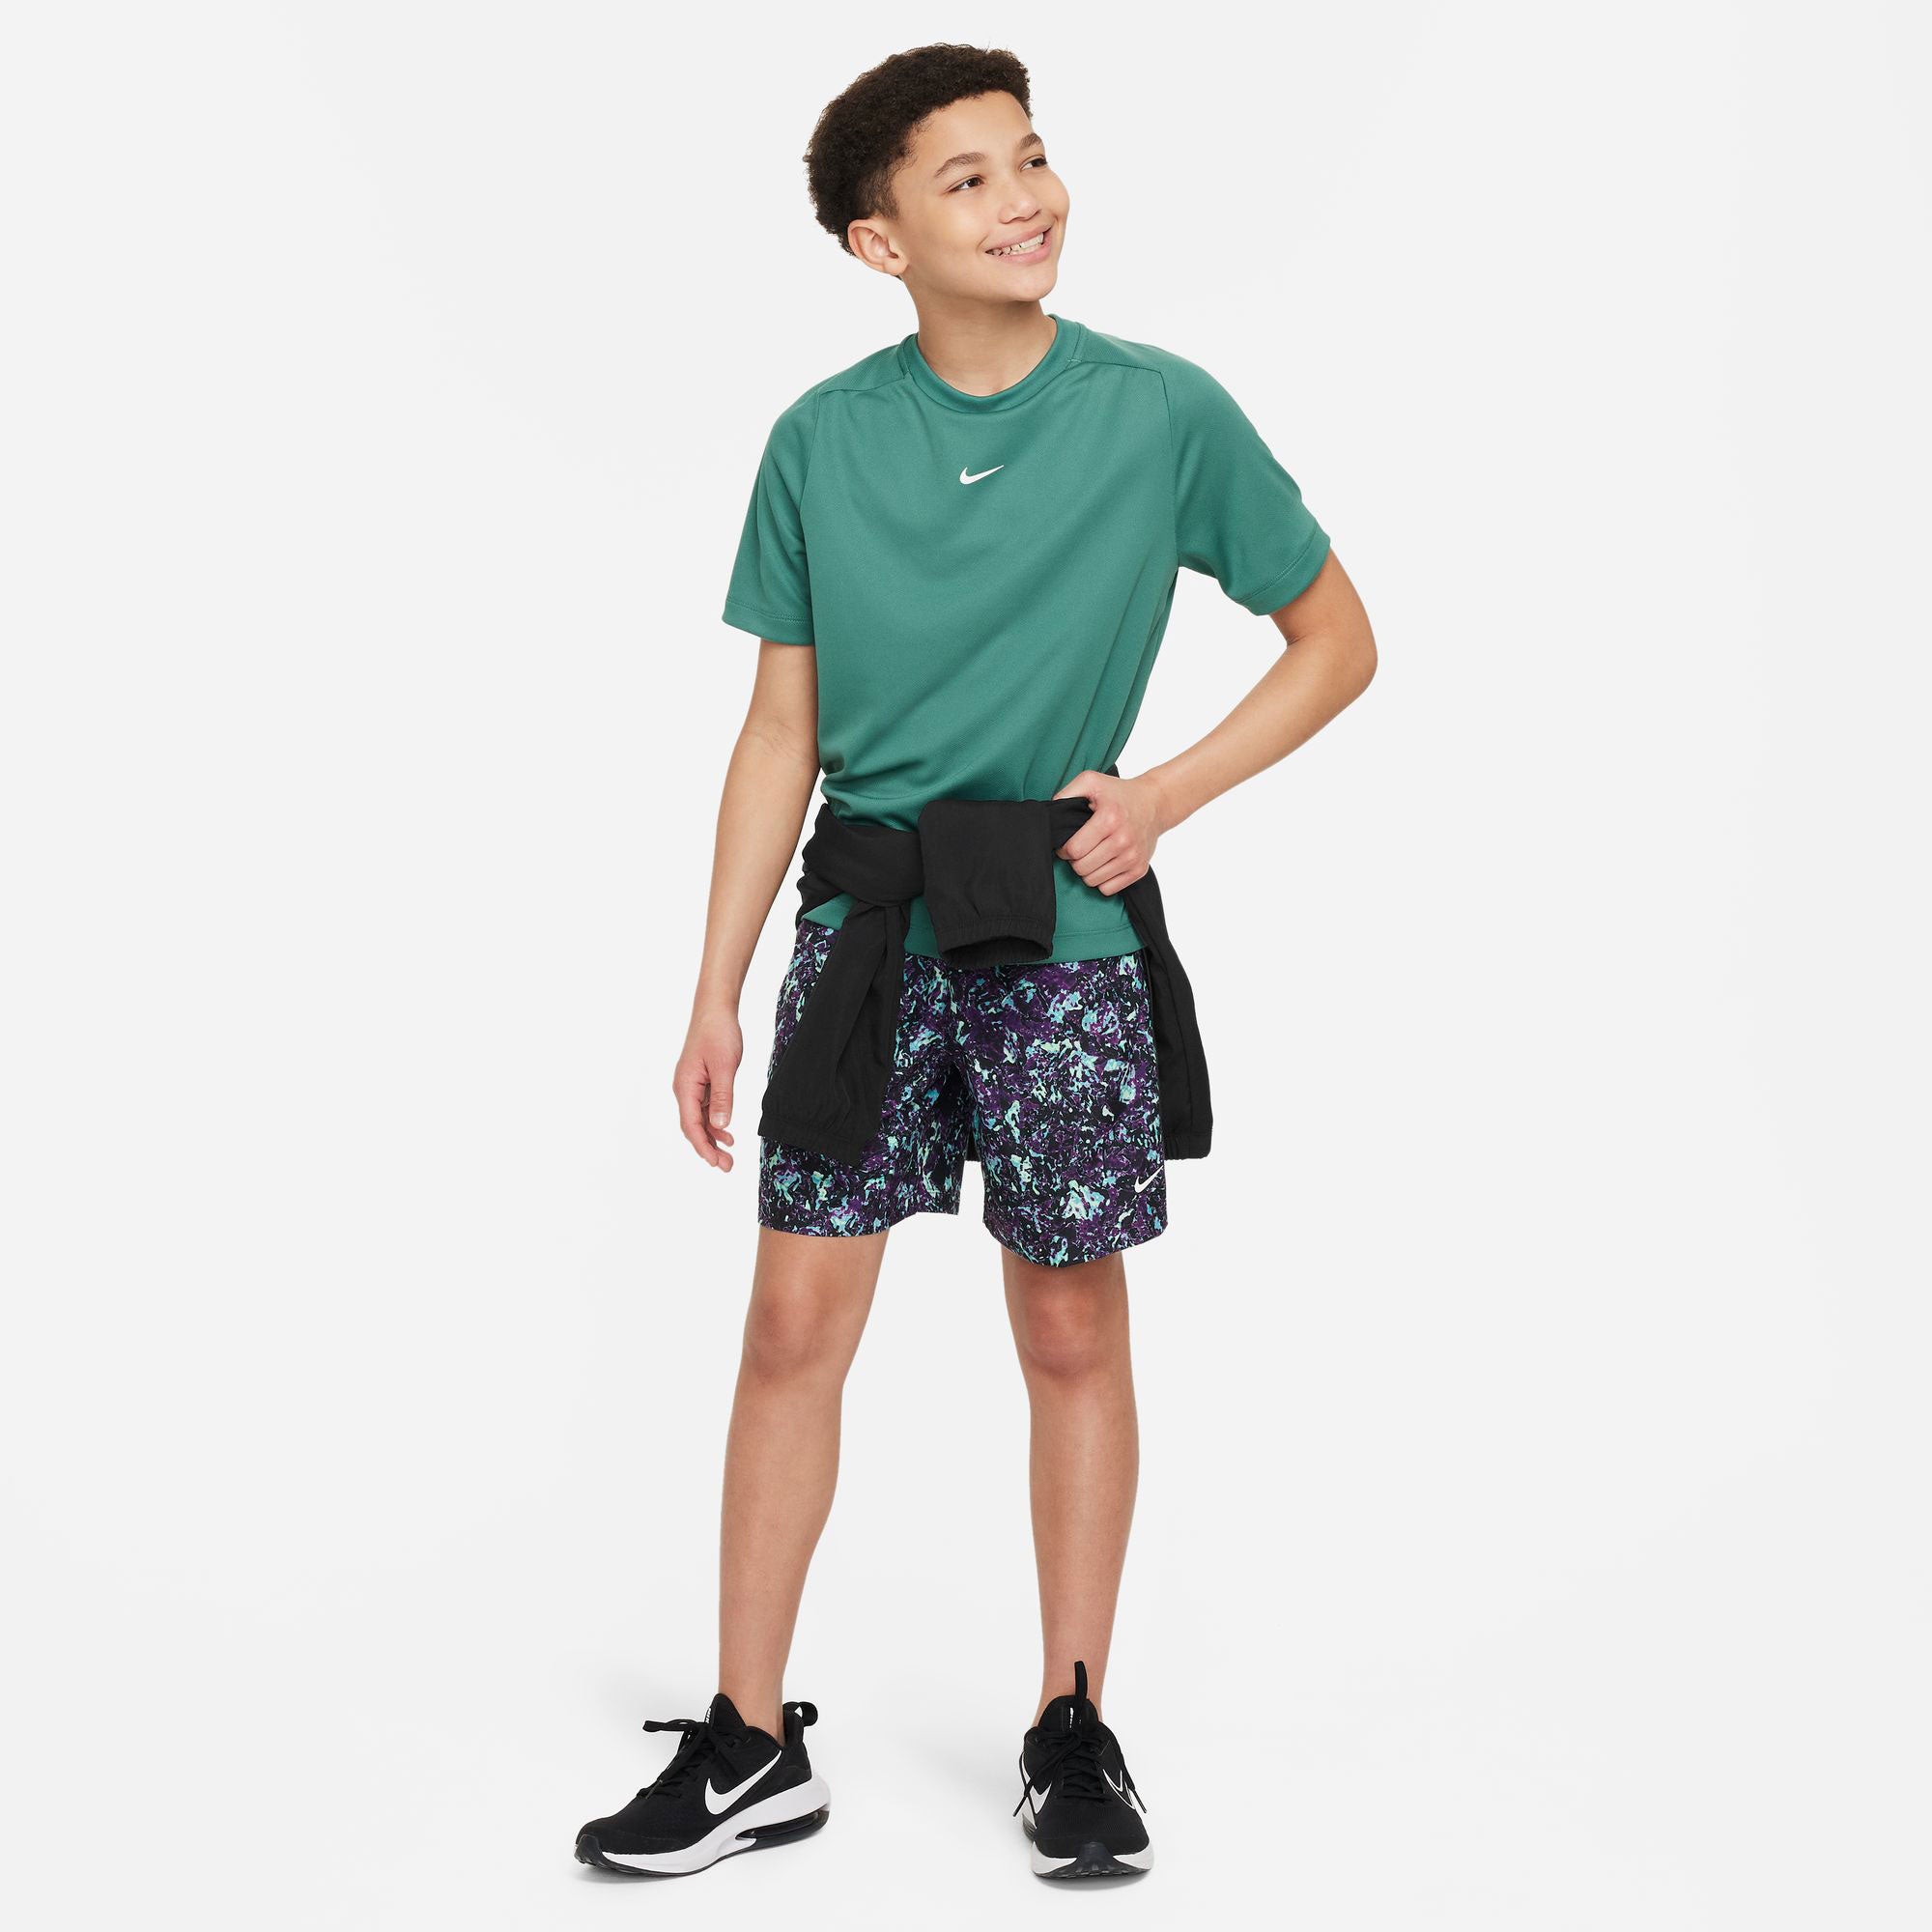 Nike Dri-FIT Multi Boys' Short Sleeve Shirt - Green (4)